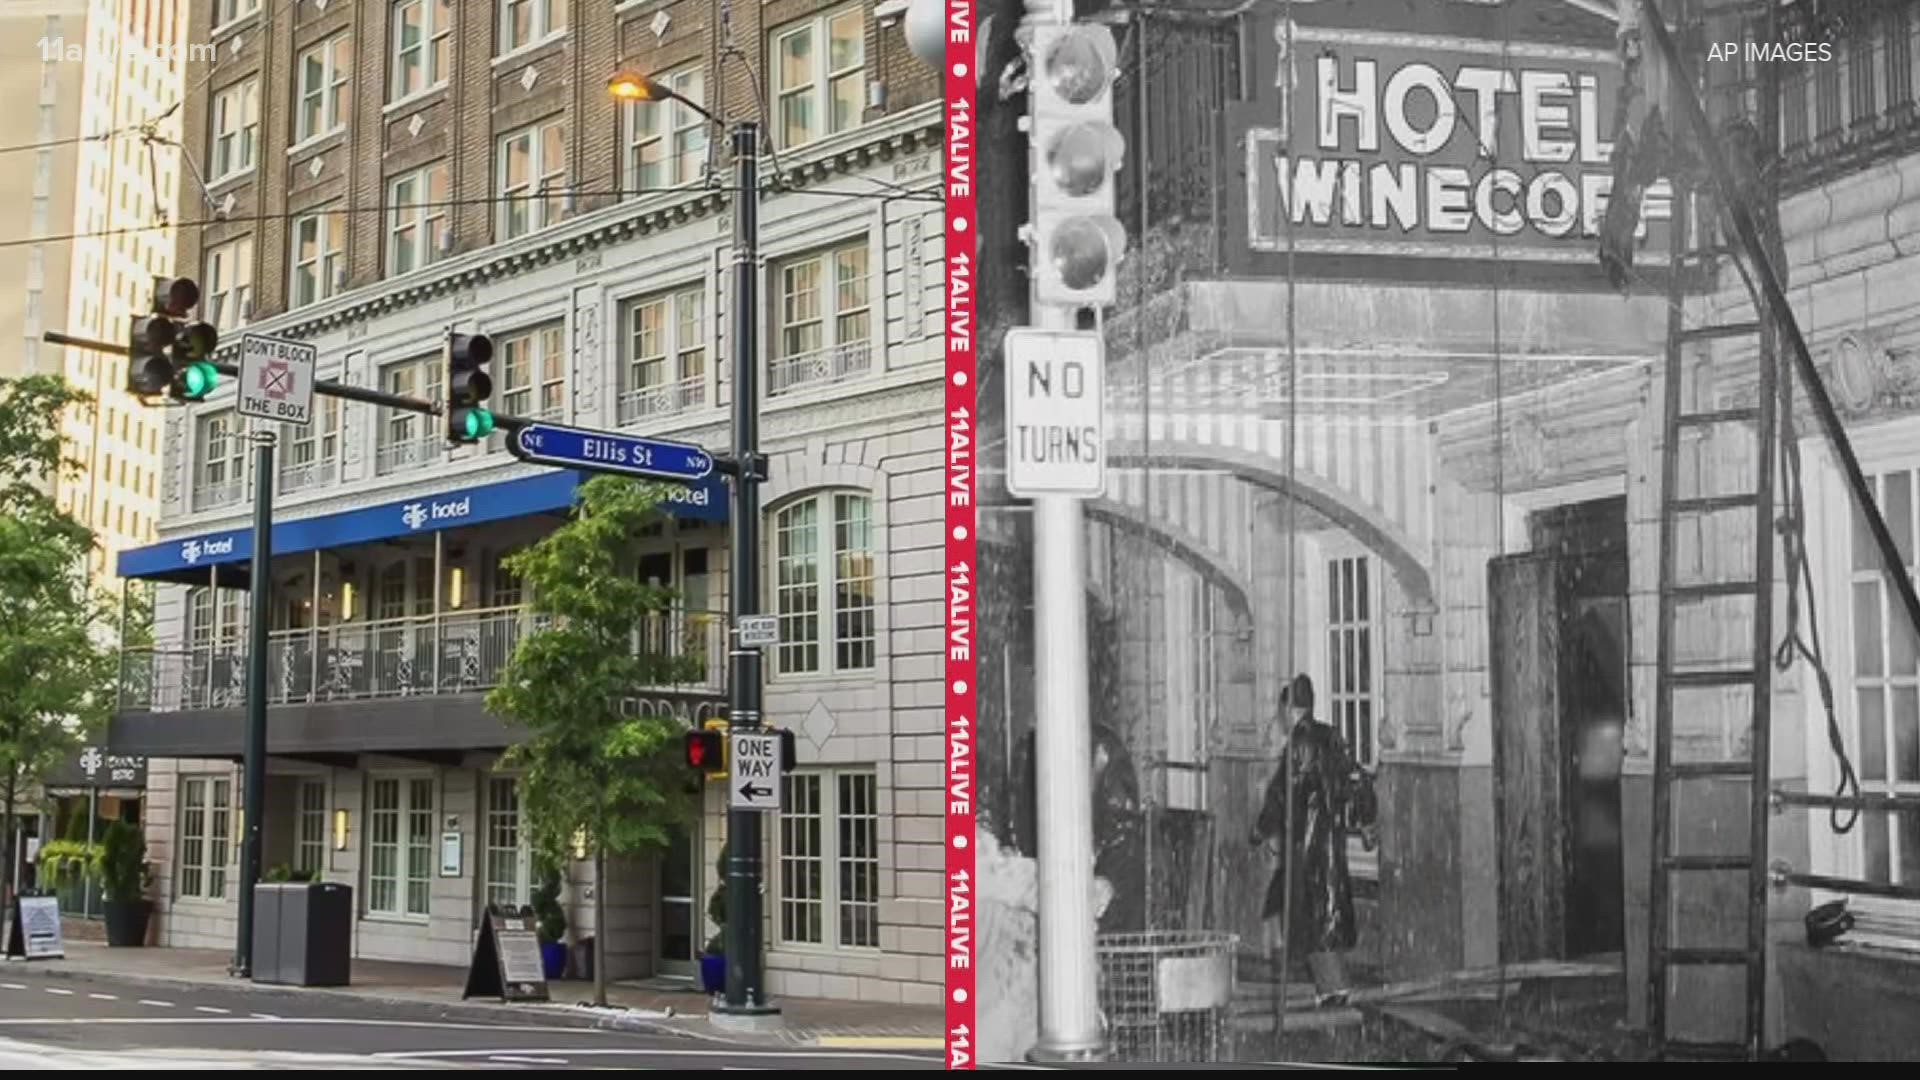 Seventy-five years ago, fire consumed Atlanta's Winecoff Hotel, killing 119 people.